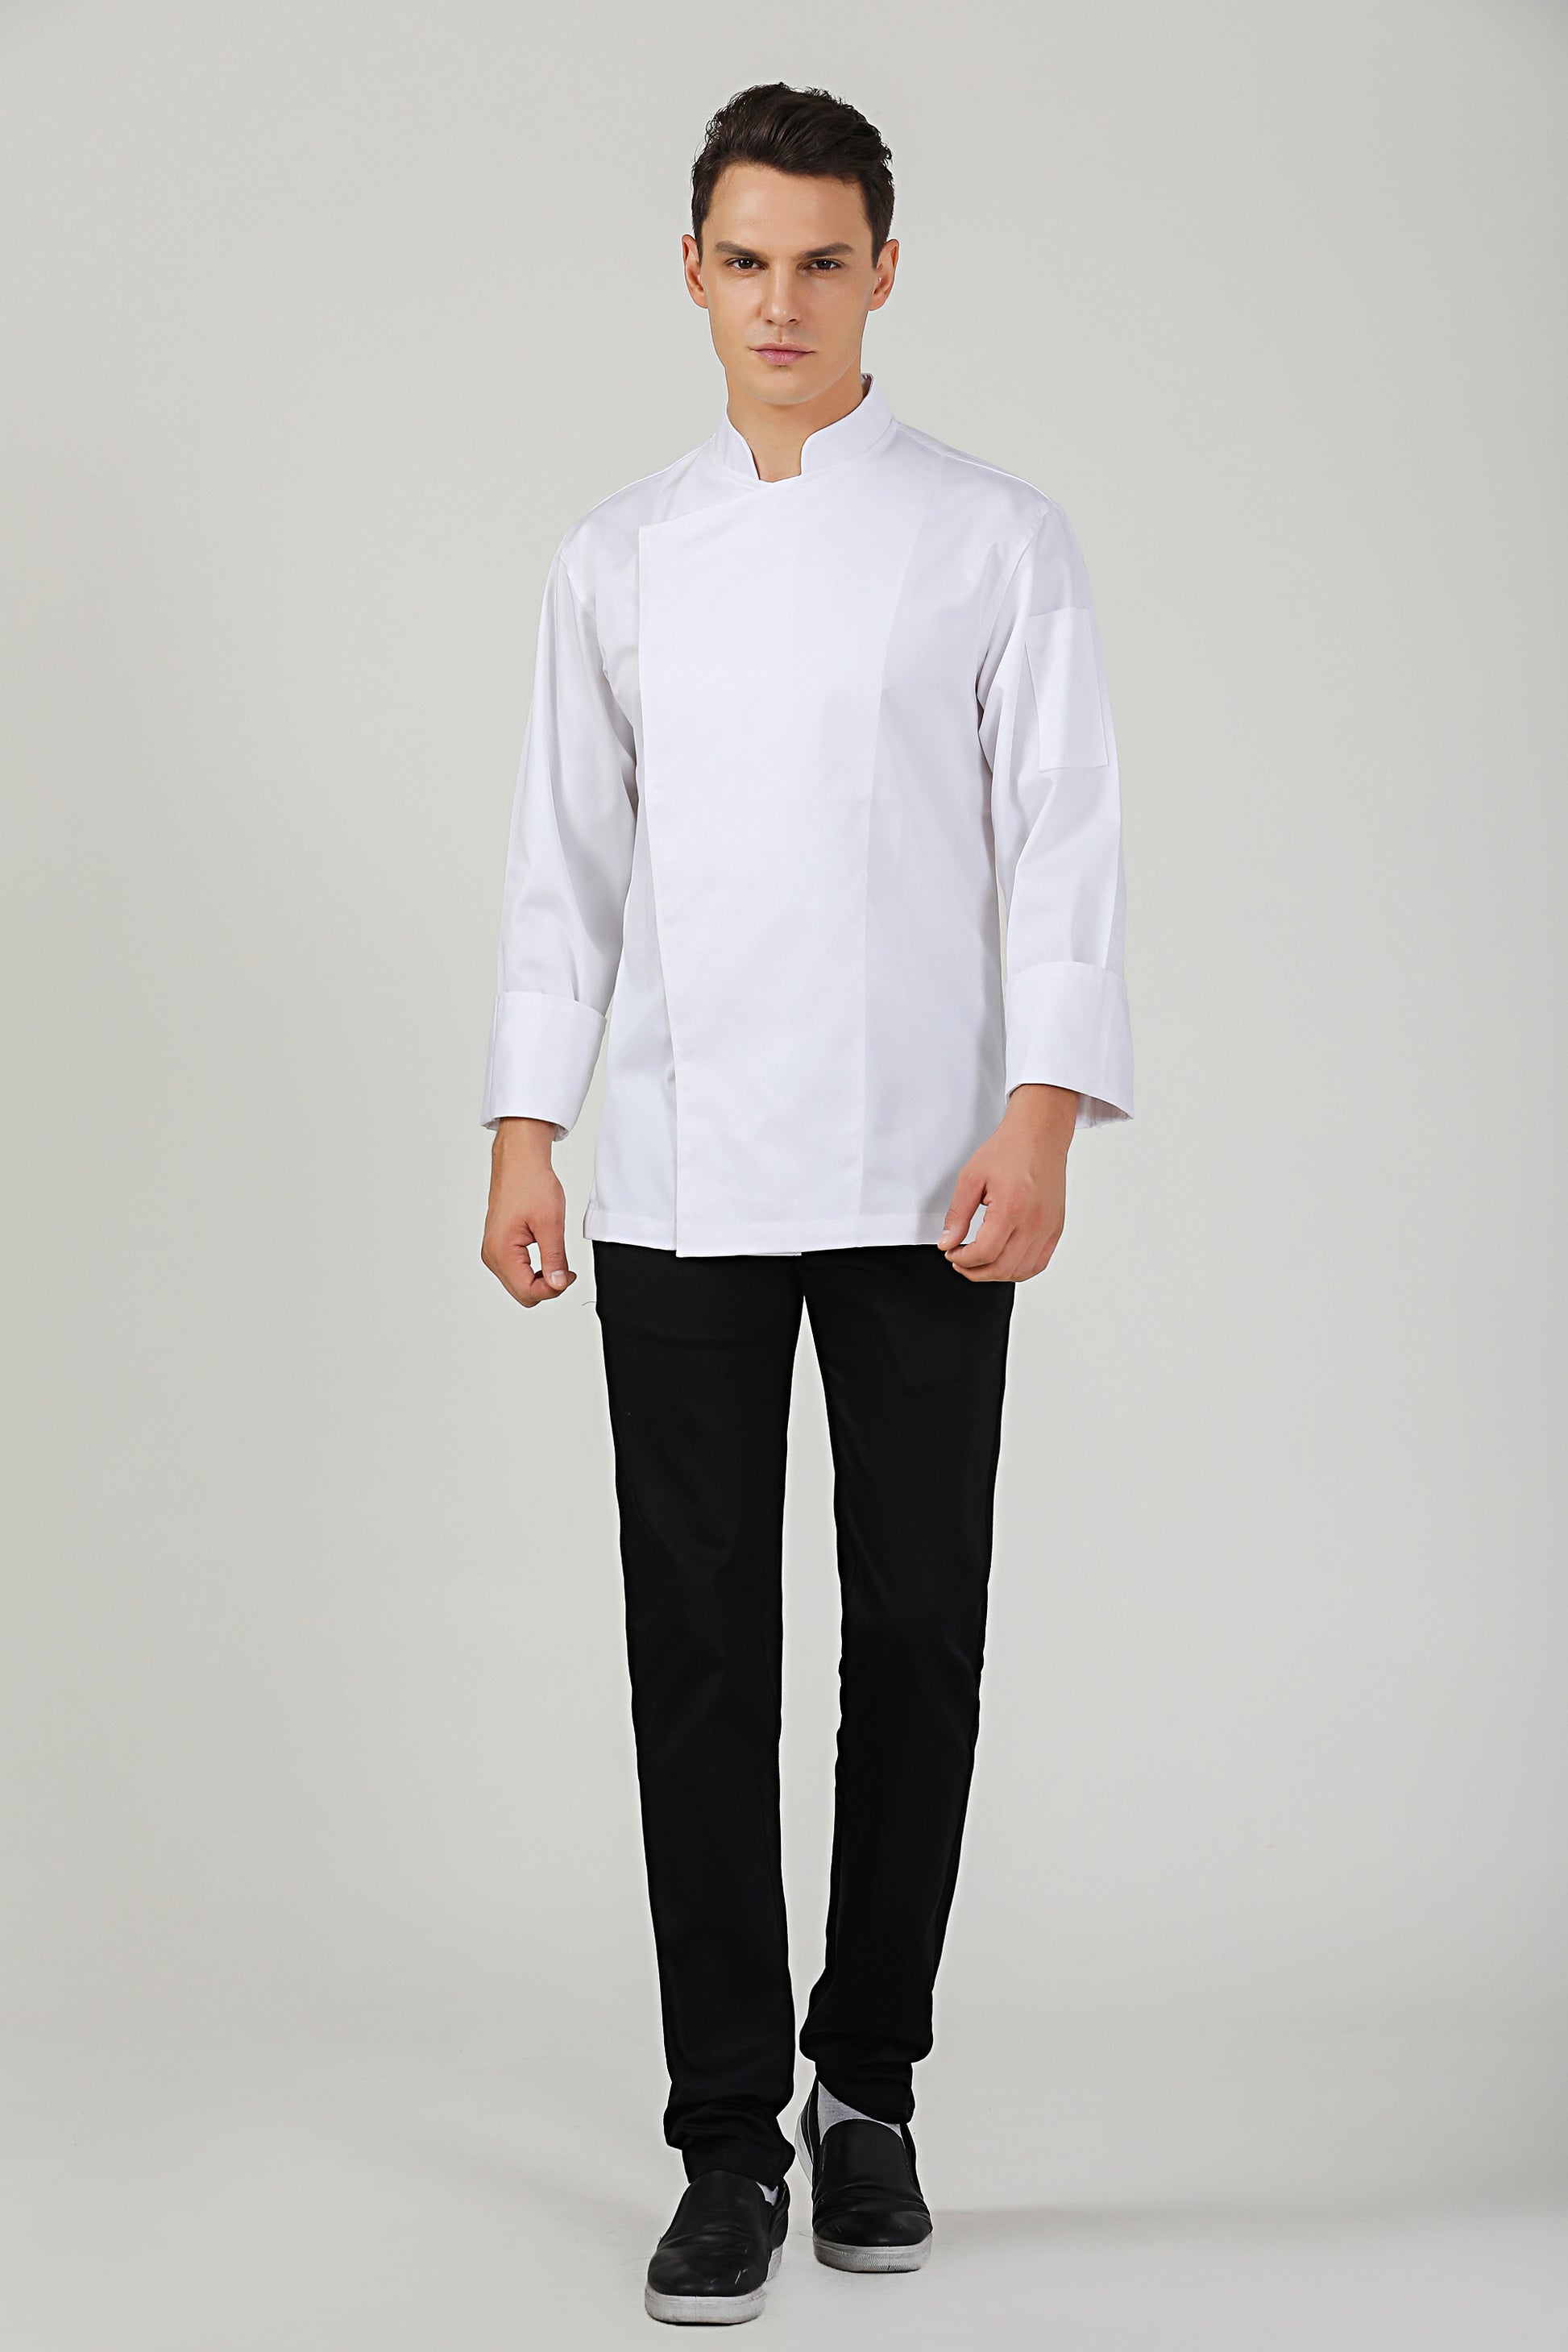 Banyan White Chef Jacket Long Sleeve